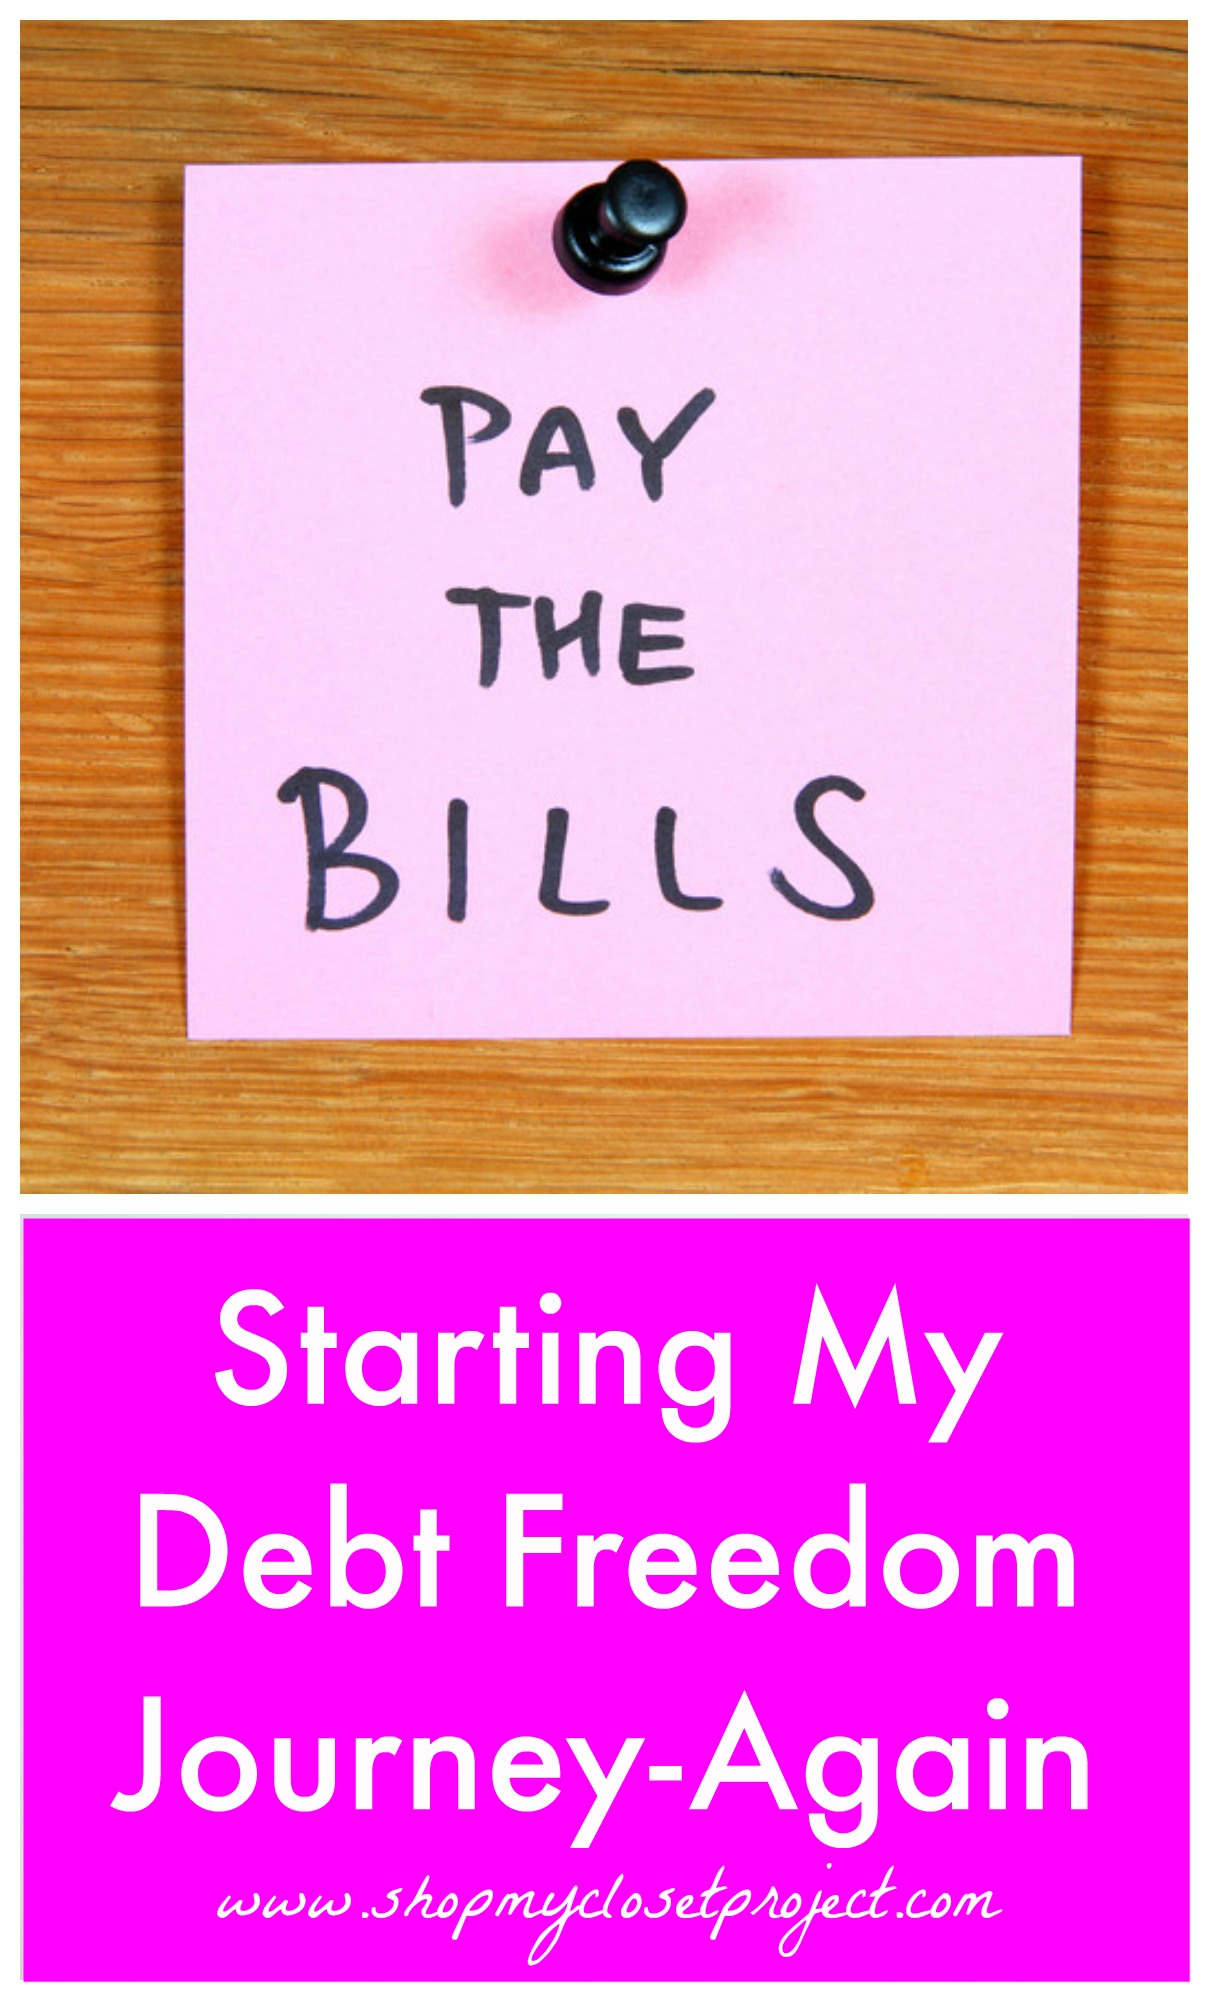 Starting My Debt Freedom Journey Again